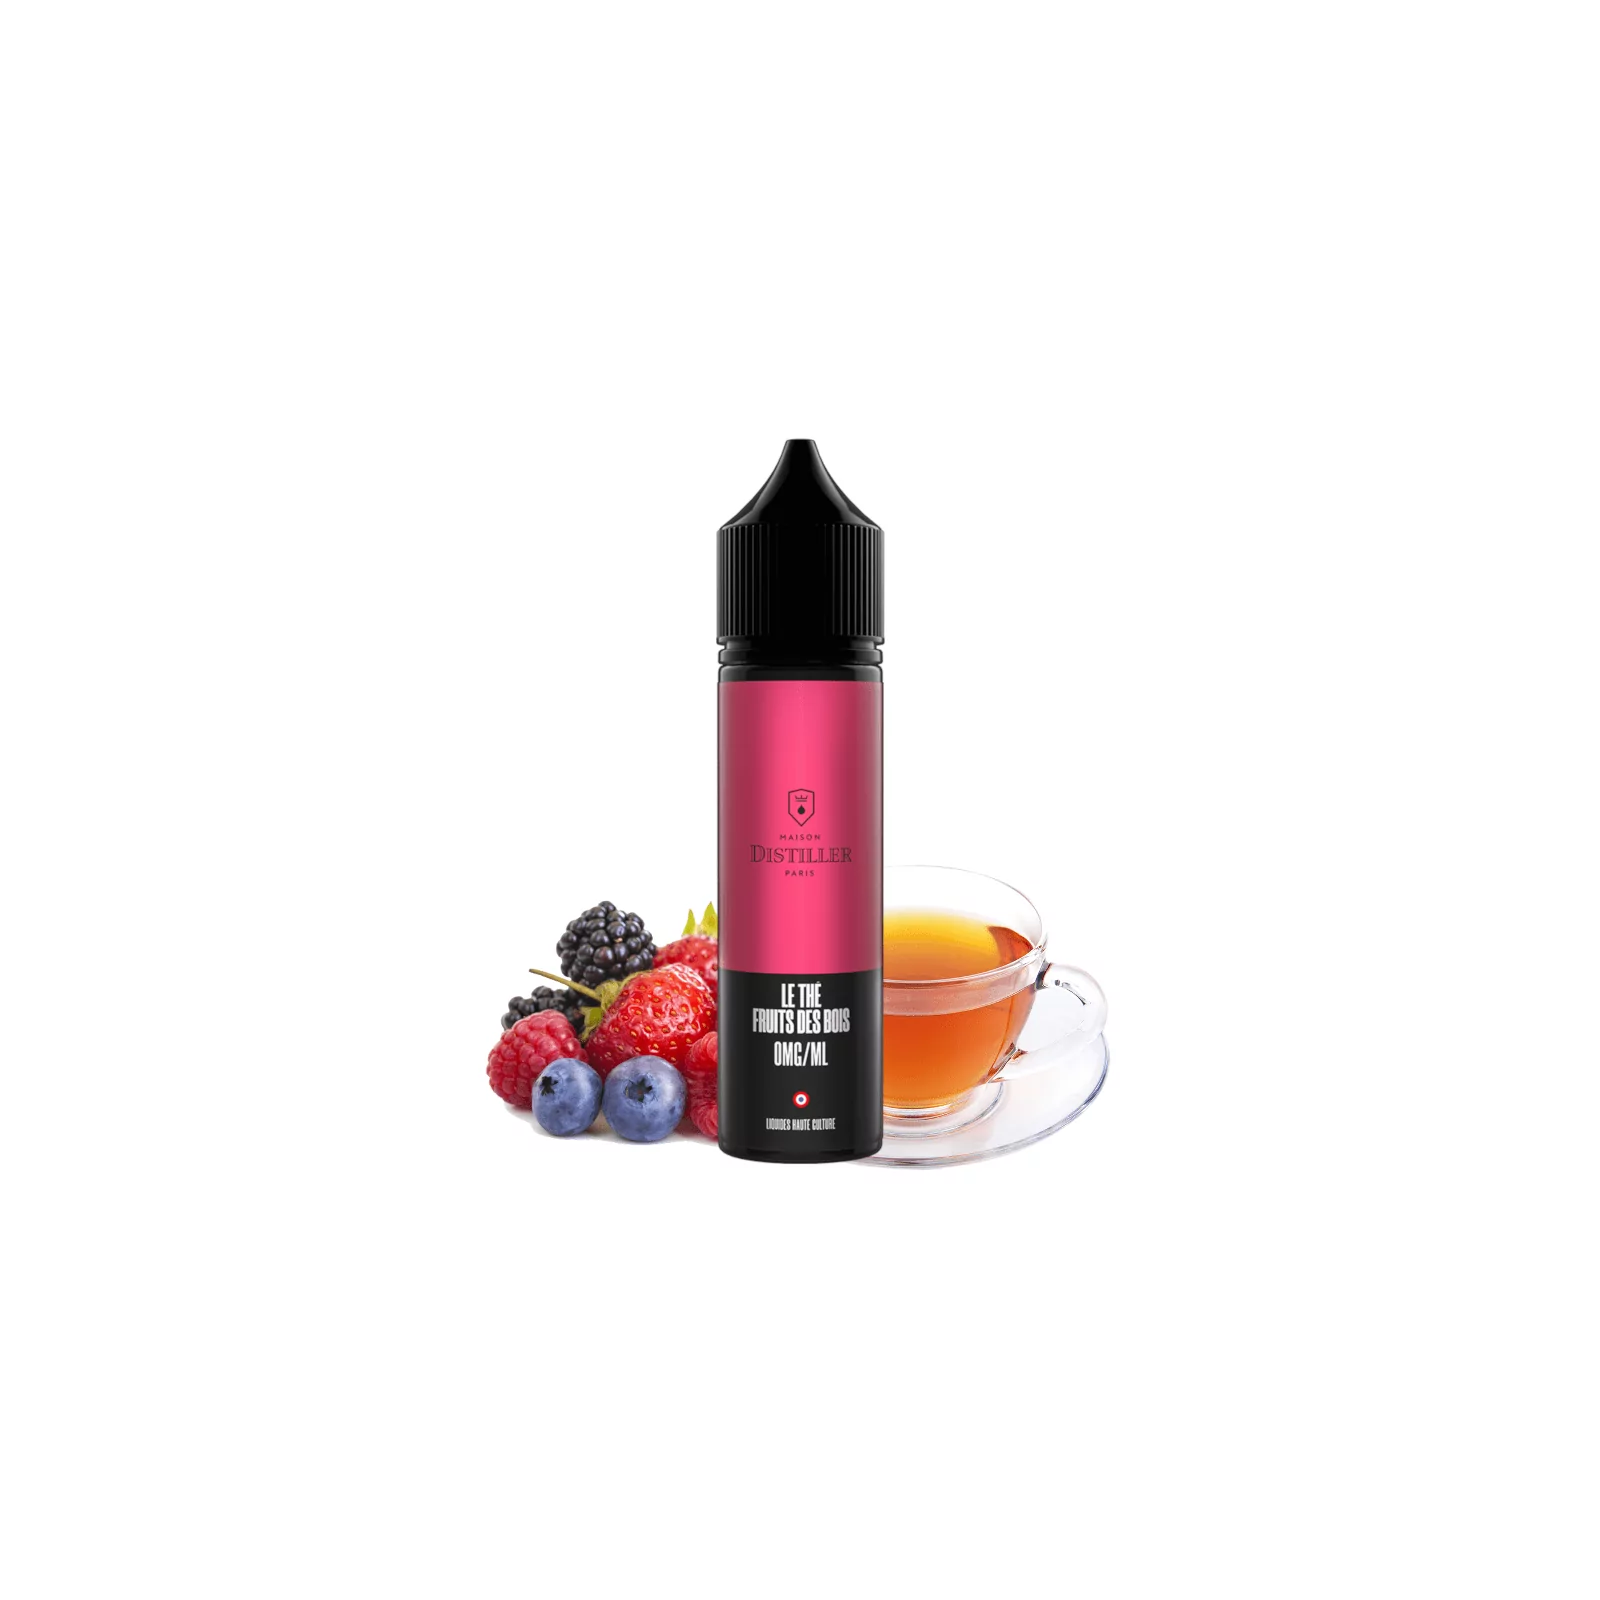 Thé-O-Rie n°3 Fruits Rouges 50ml - Le Distiller